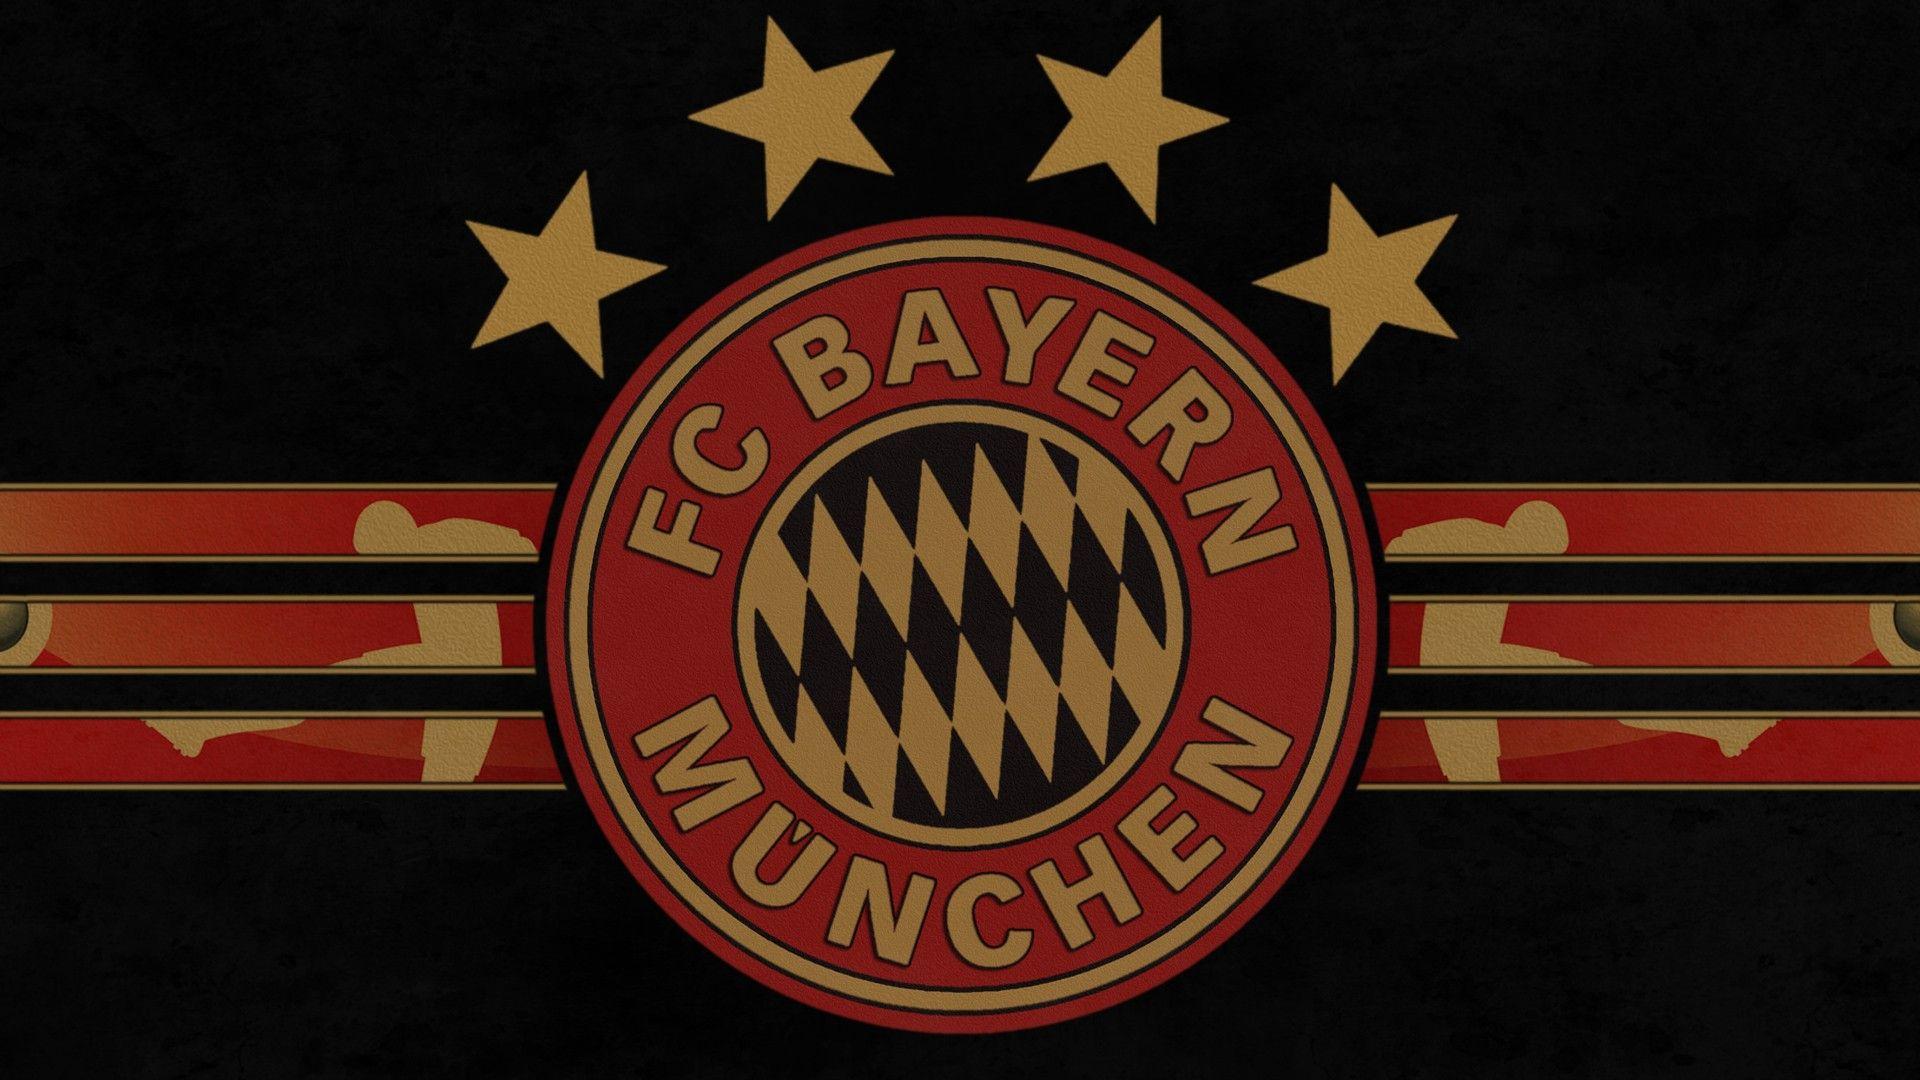 Download Free Bayern Munich Wallpaper